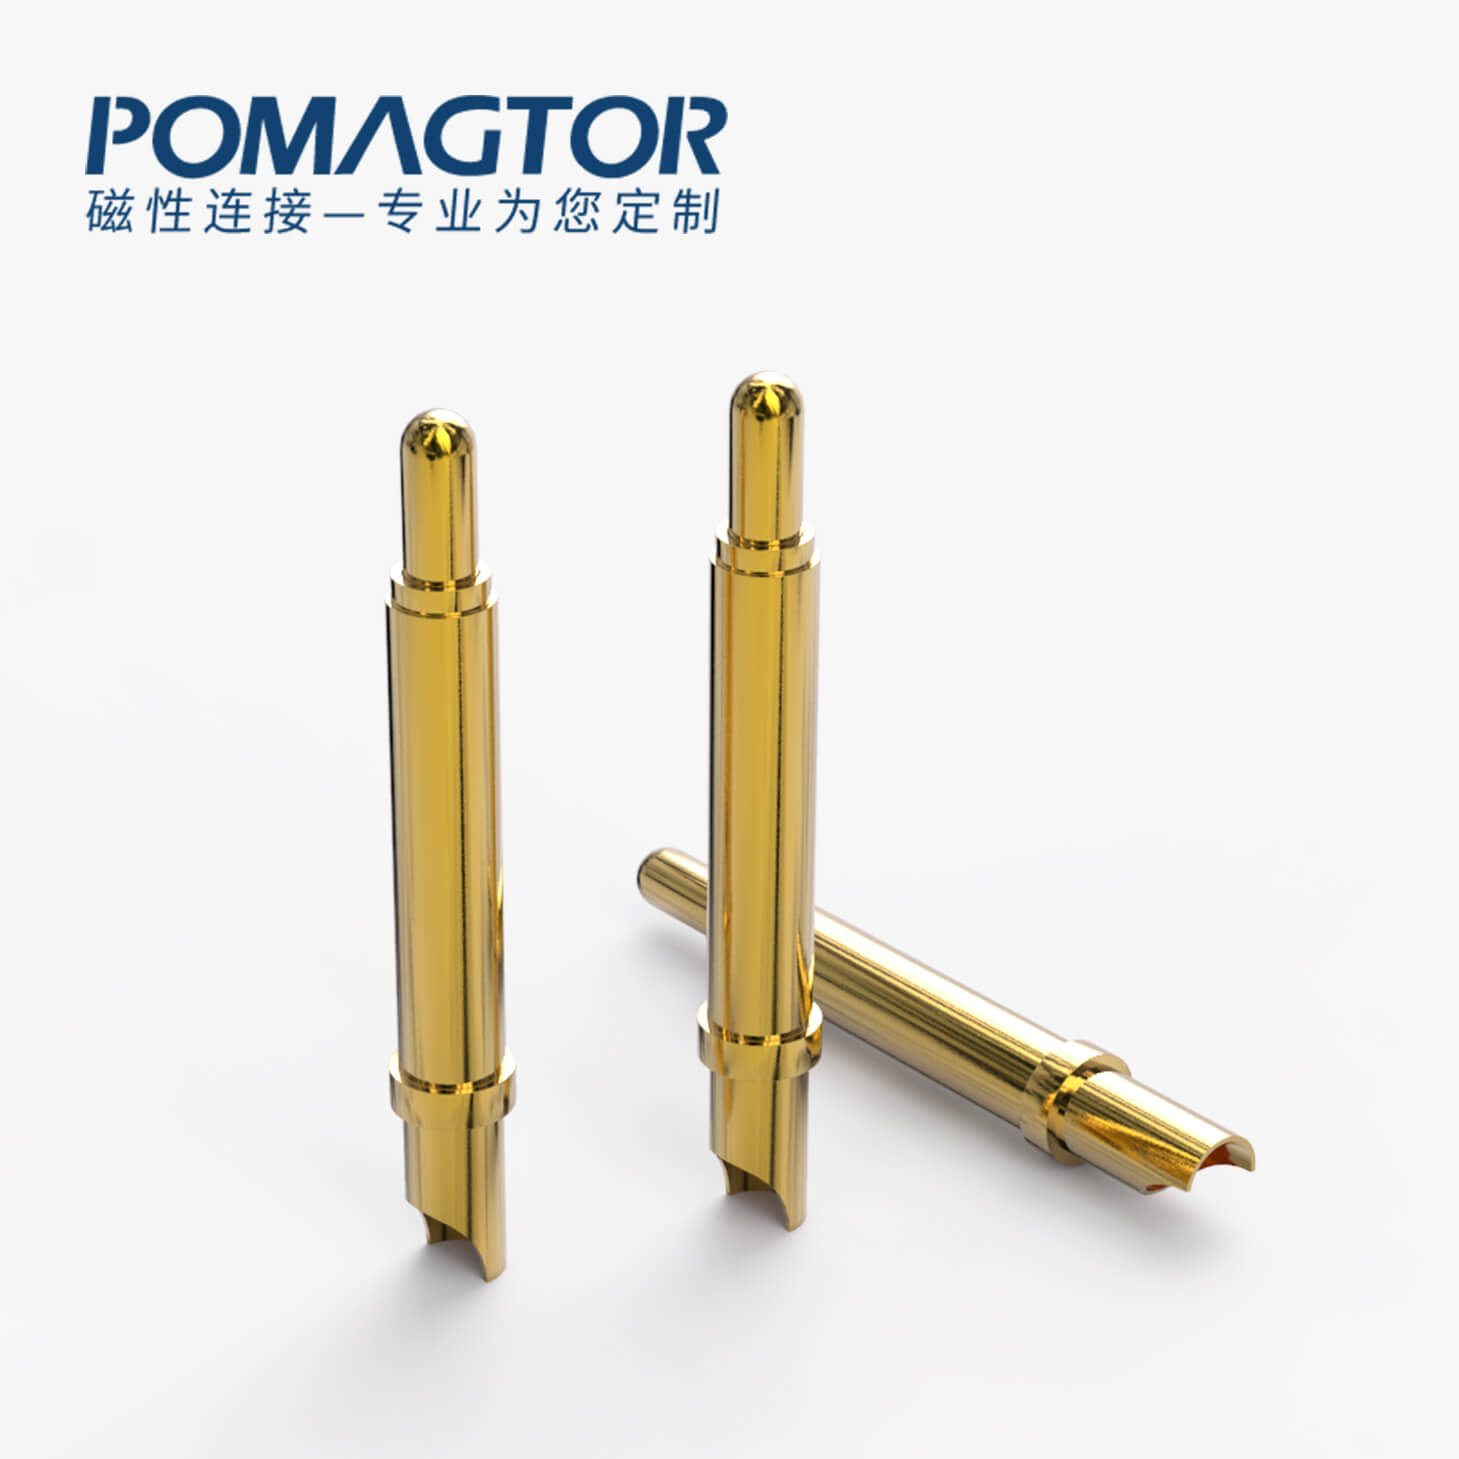 POGO PIN 焊线式：电镀黄铜Au50u，电流3A，工作行程1.5mm:140±20gf，弹力50000次+，工作温度-30°~85°